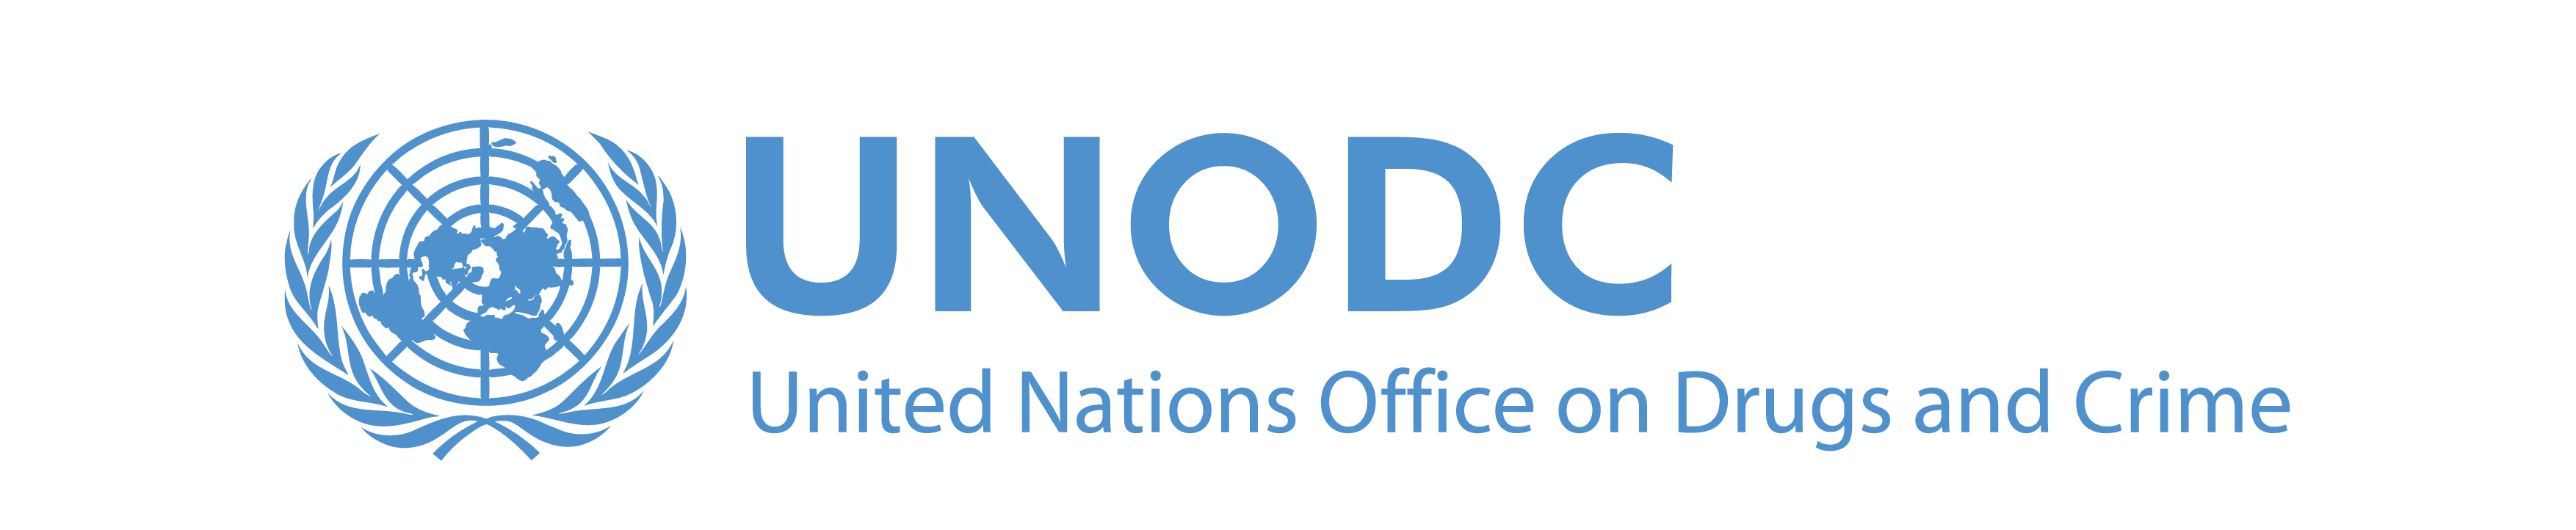 UNODC_logo_S_unblue-01